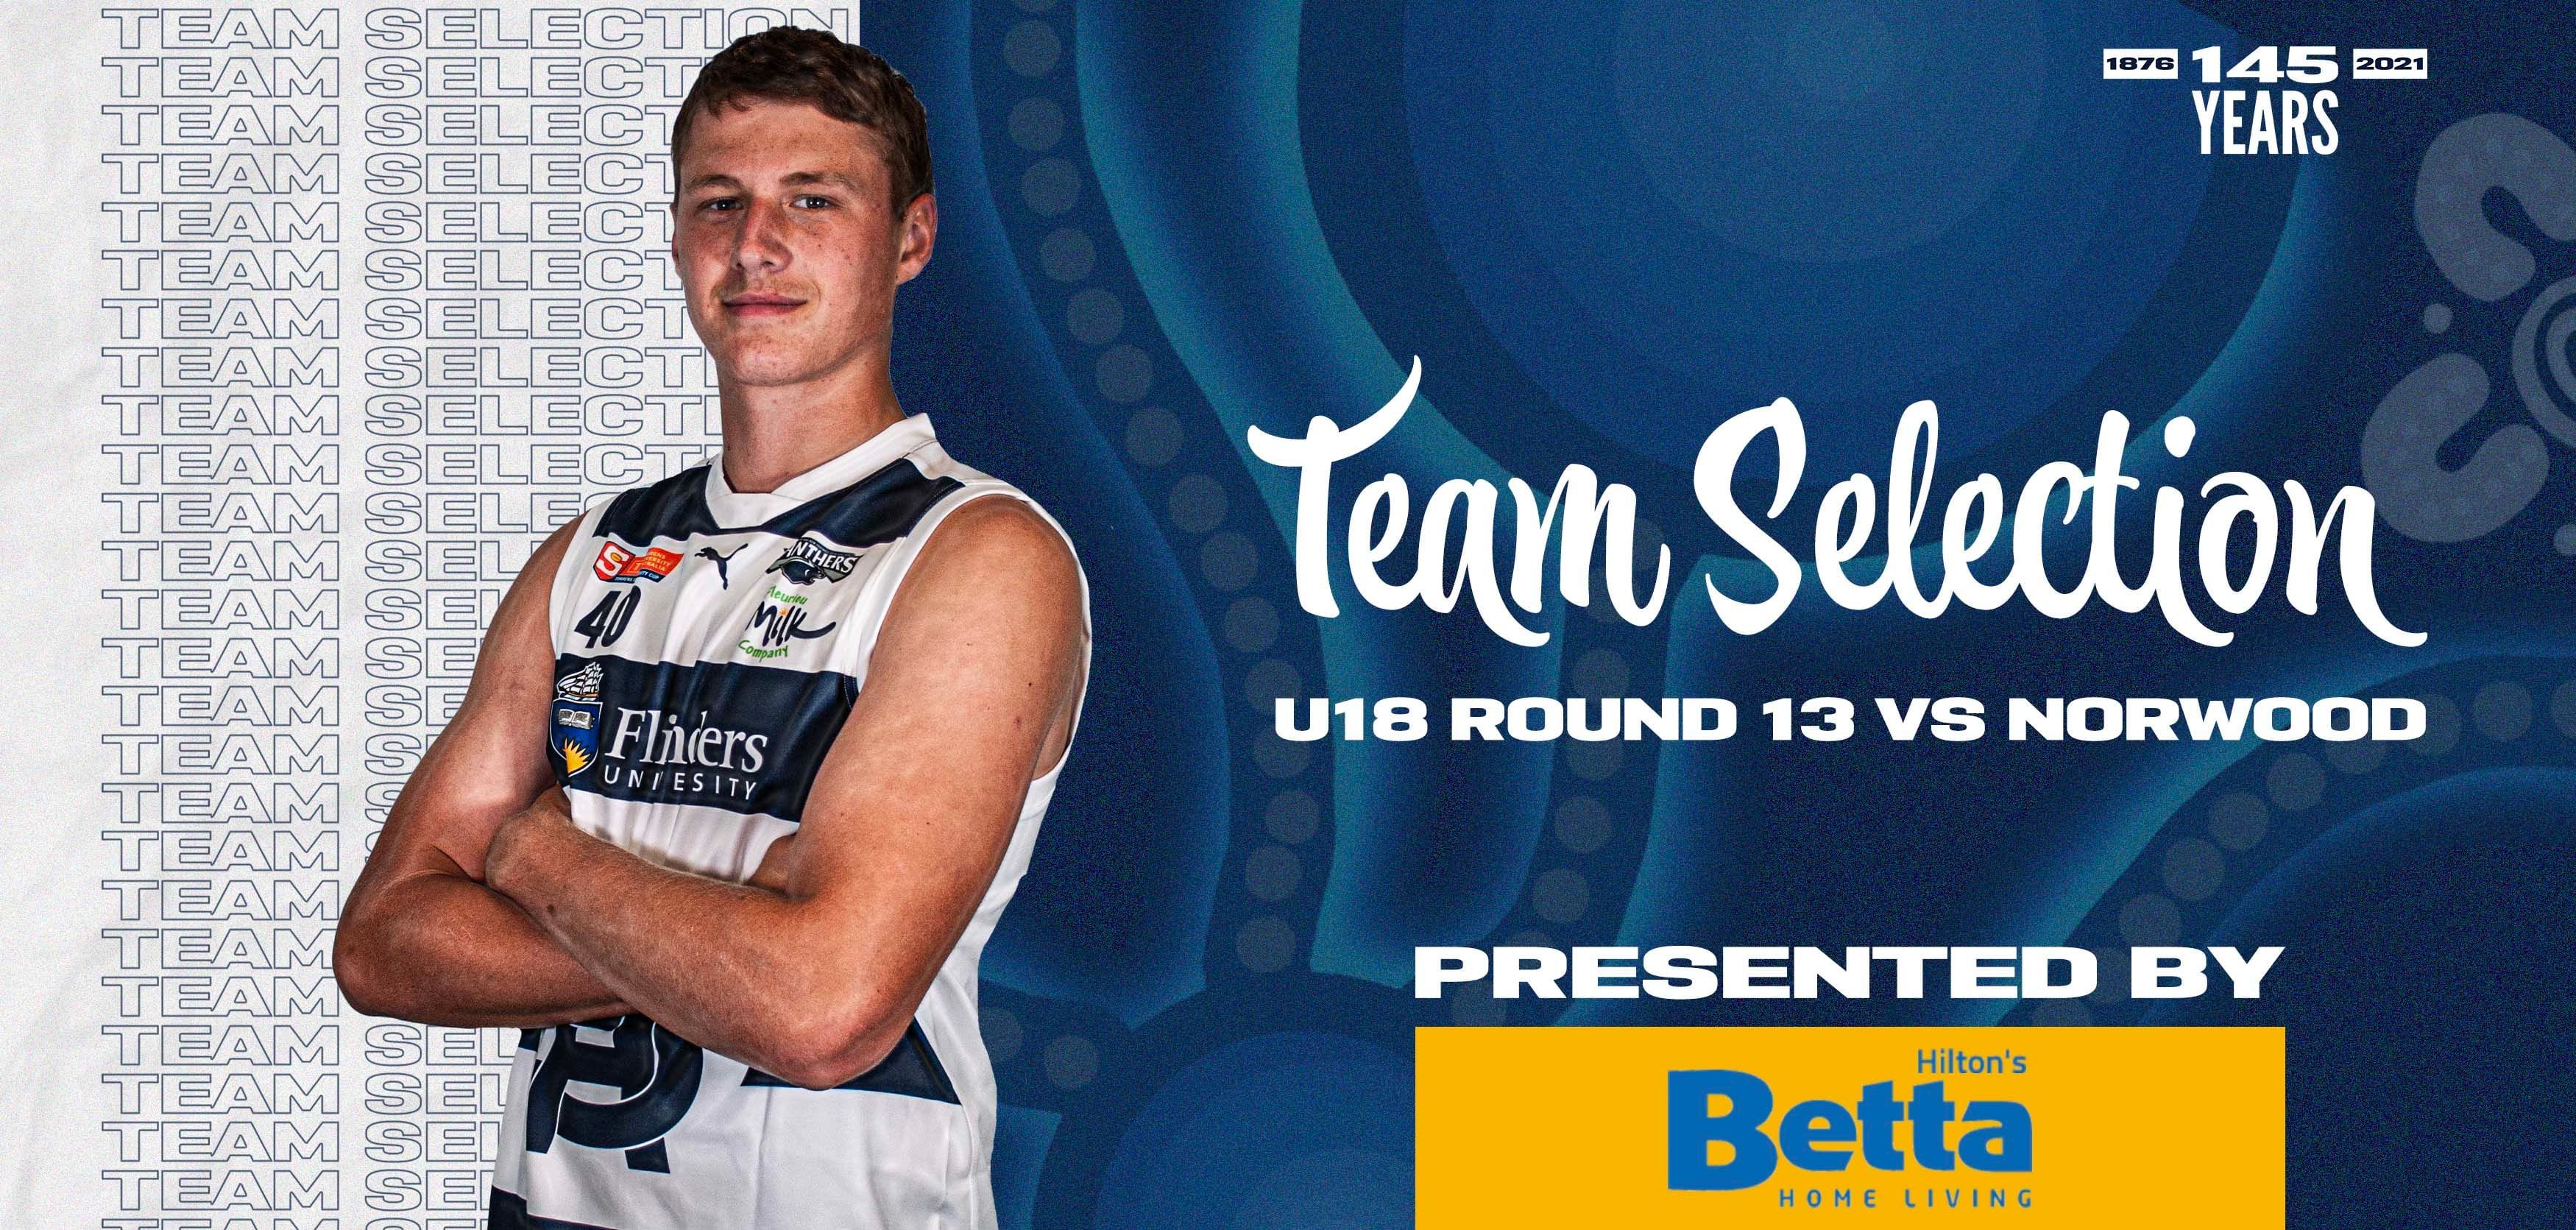 BETTA Team Selection: Under-18 Round 13 vs Norwood